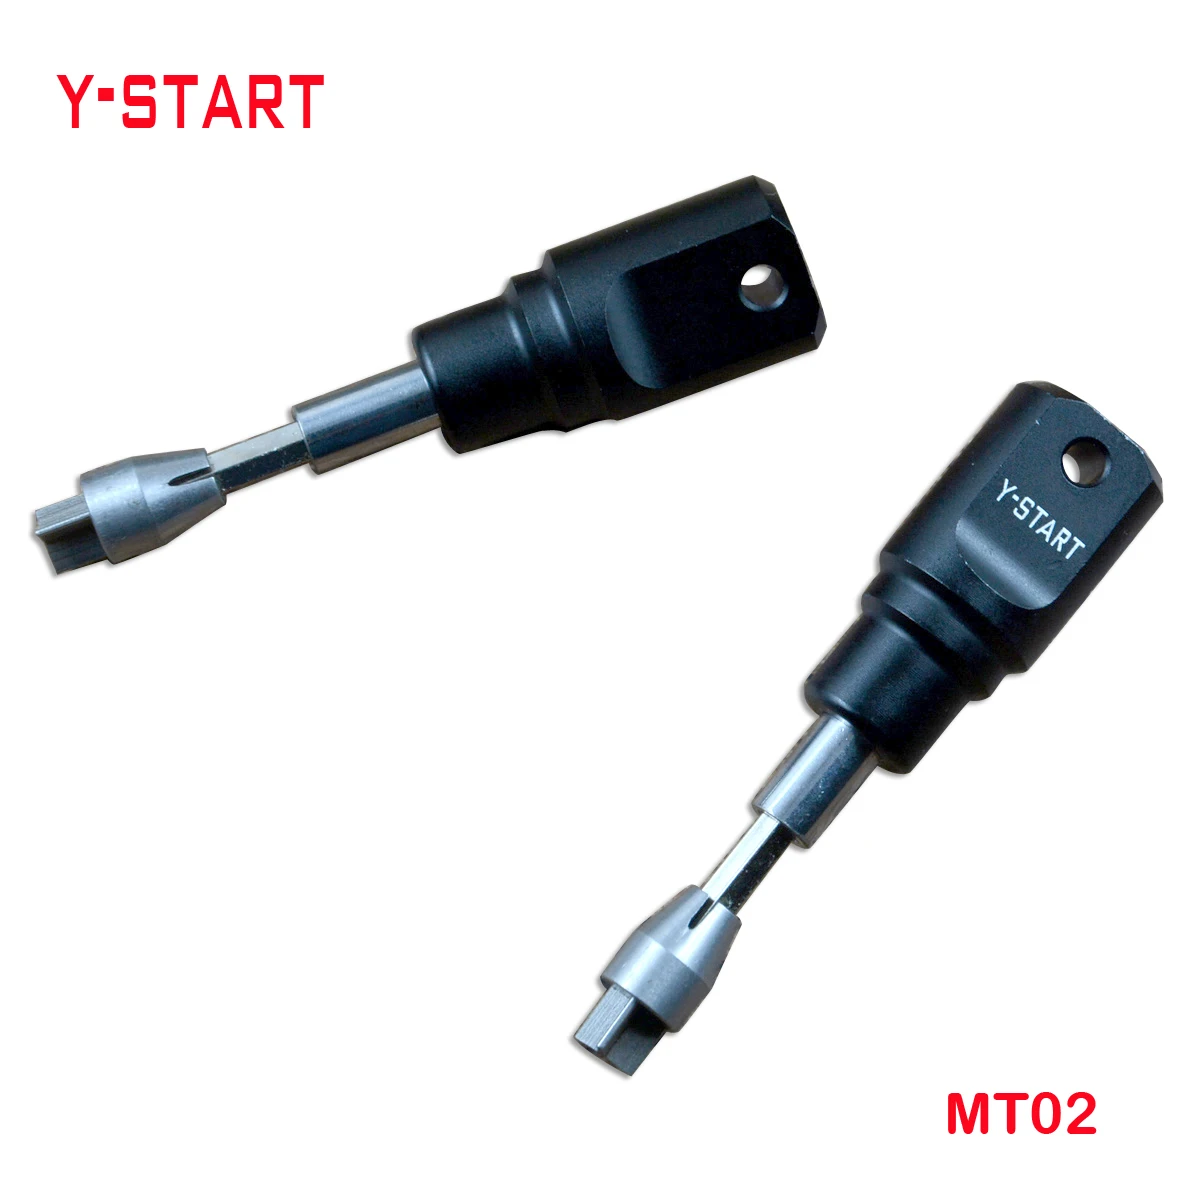 

Y-START MT02 Axial Screwdriver Torix Aluminium Alloy Handle for Y-START Knives , EDC Tool